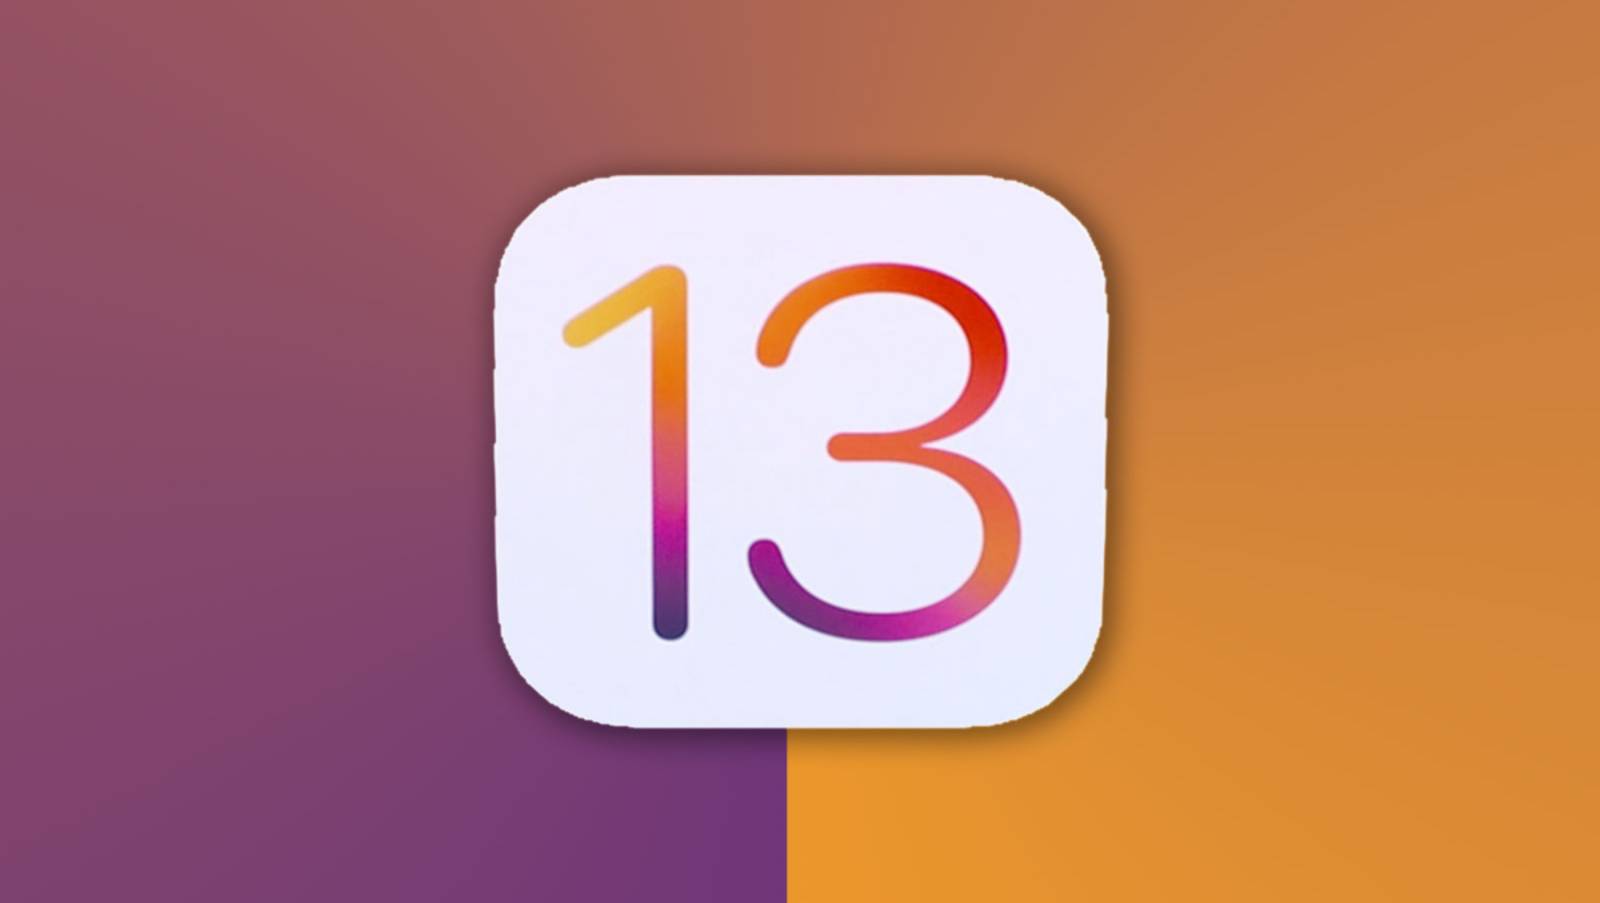 13 iOS Beta 5